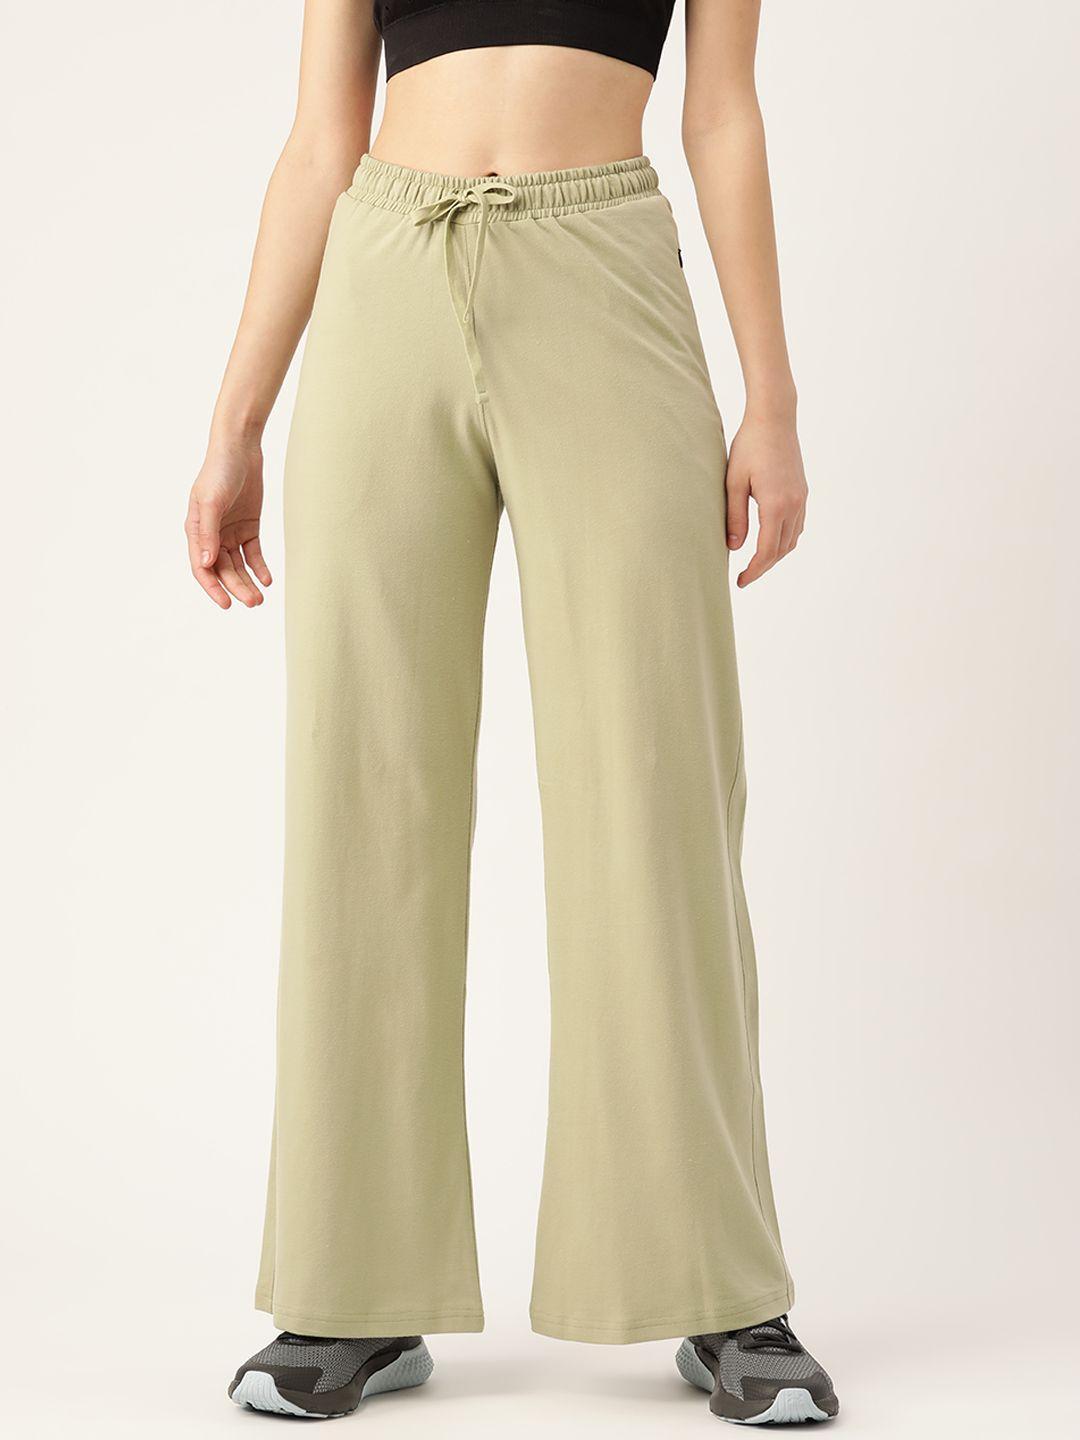 femea women olive green solid cotton wide leg track pants